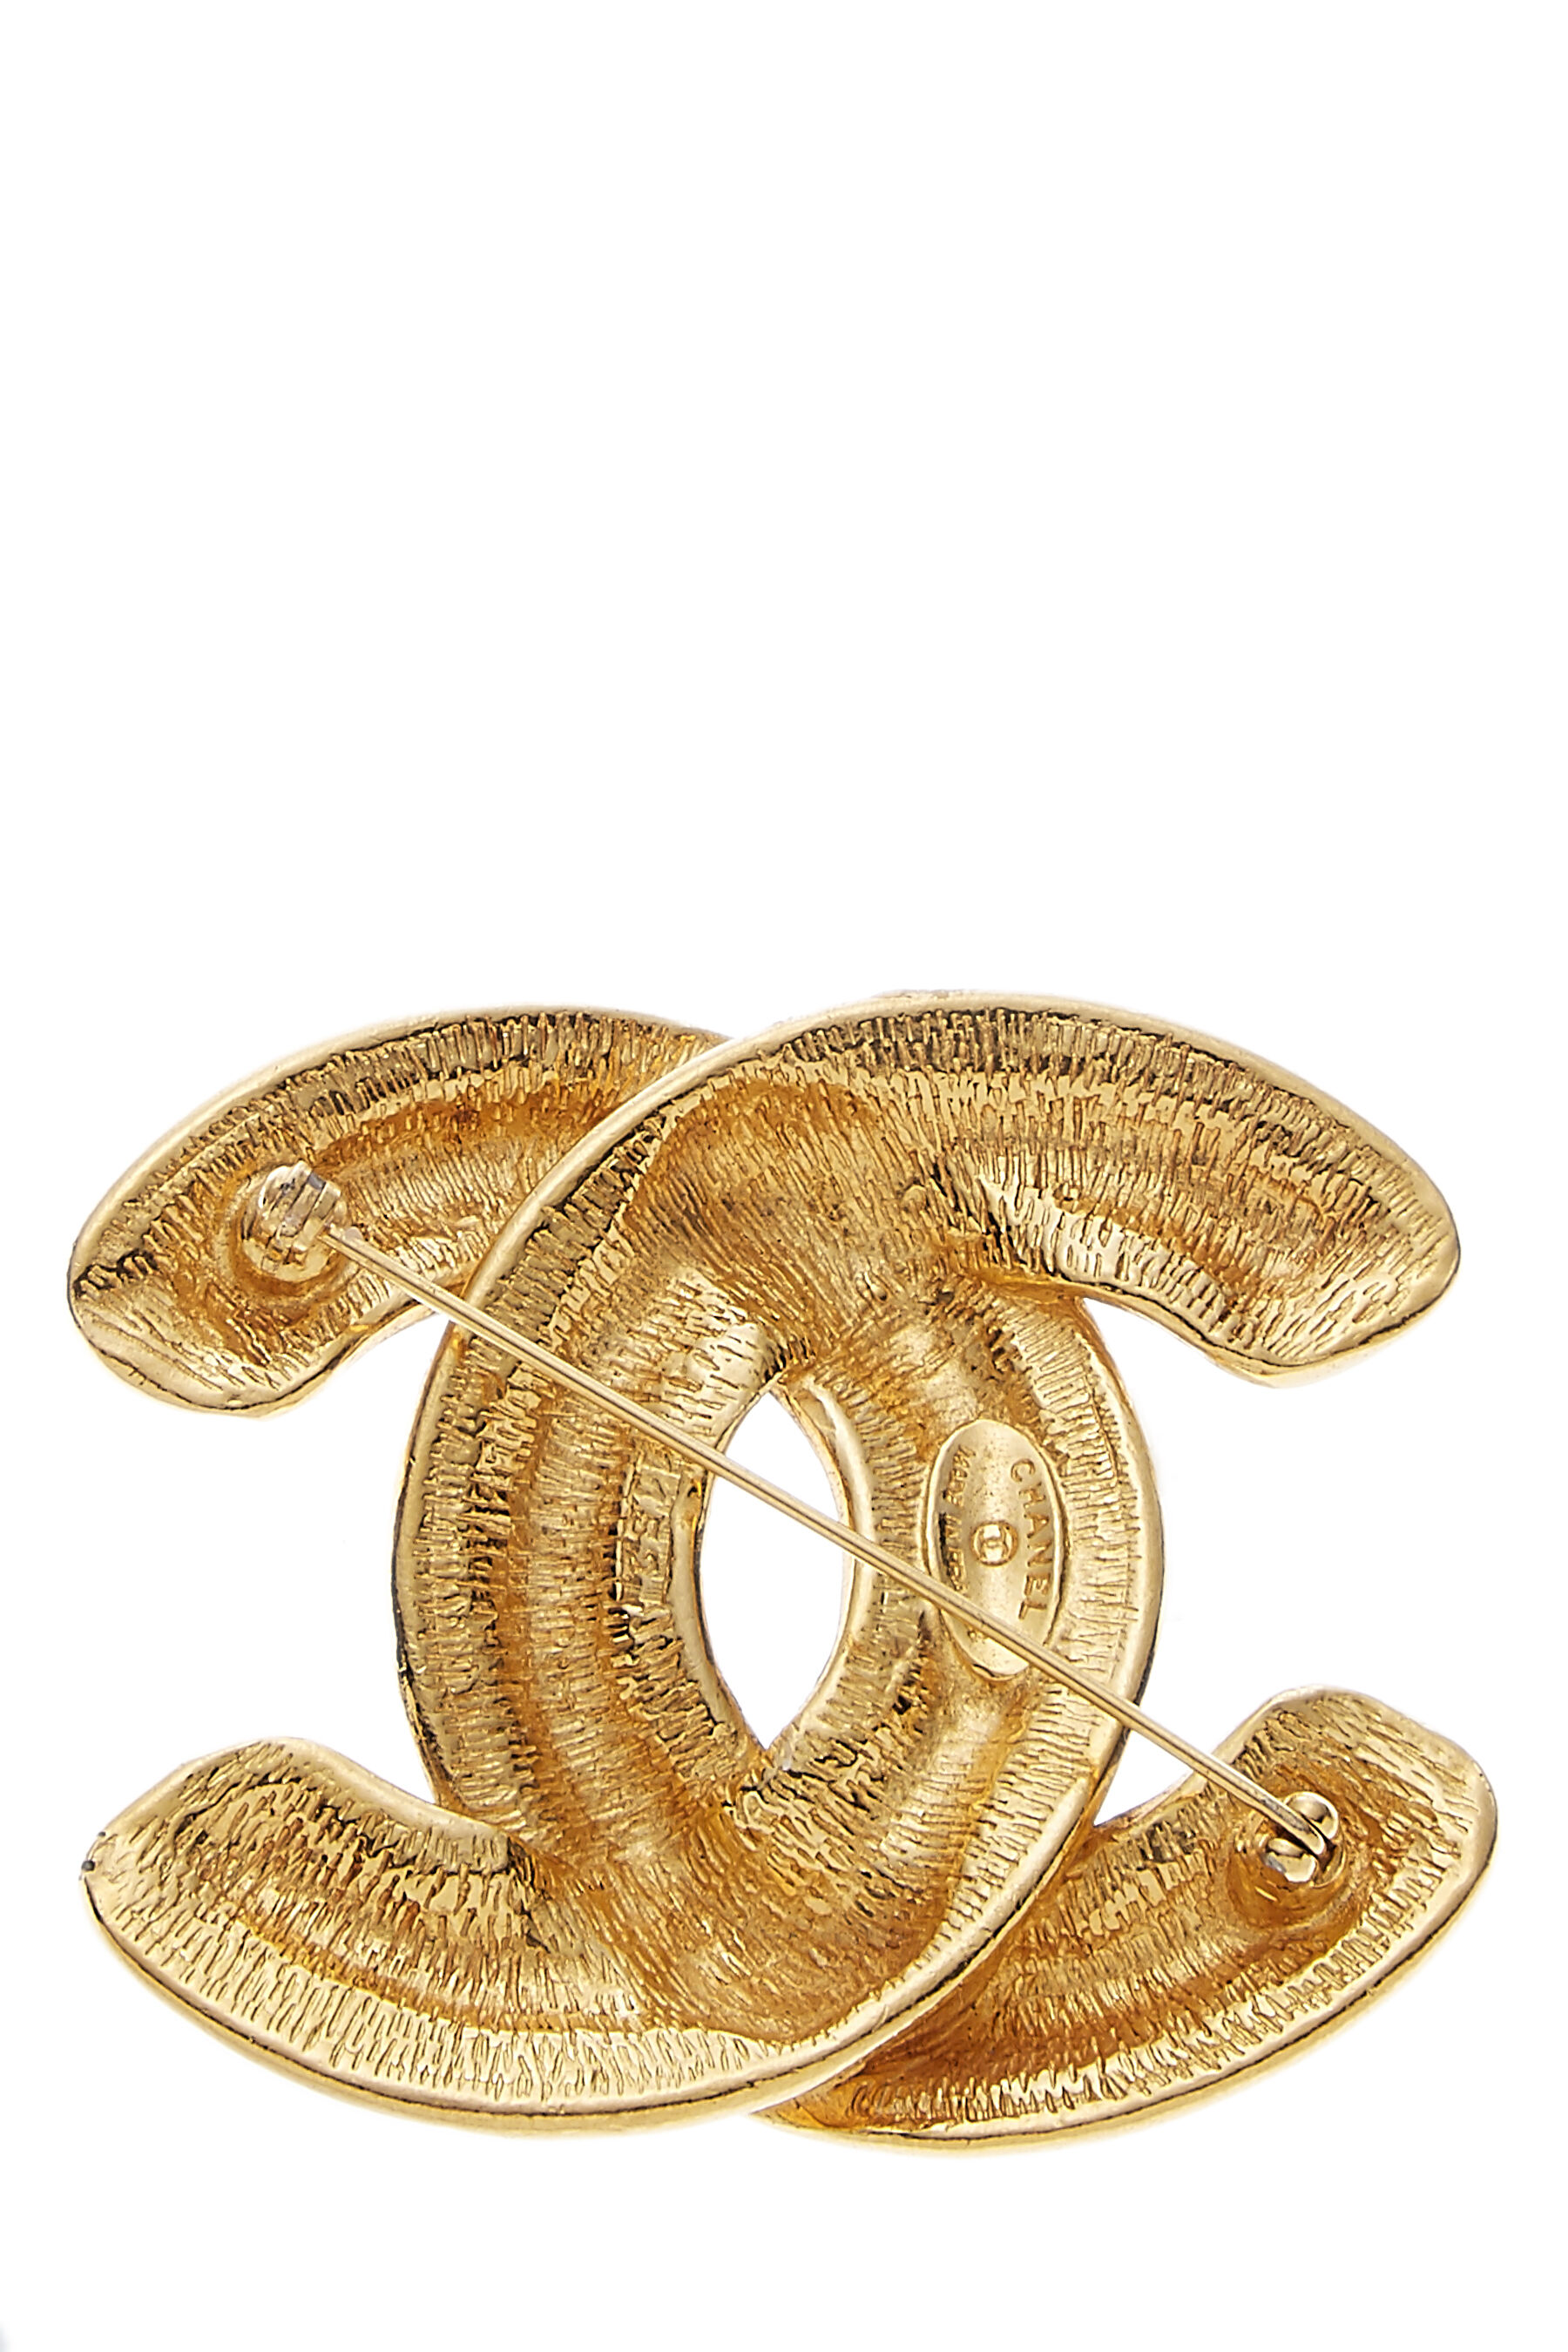 Chanel Gold 'CC' Turnlock Pin Large Q6J0NM17D5048